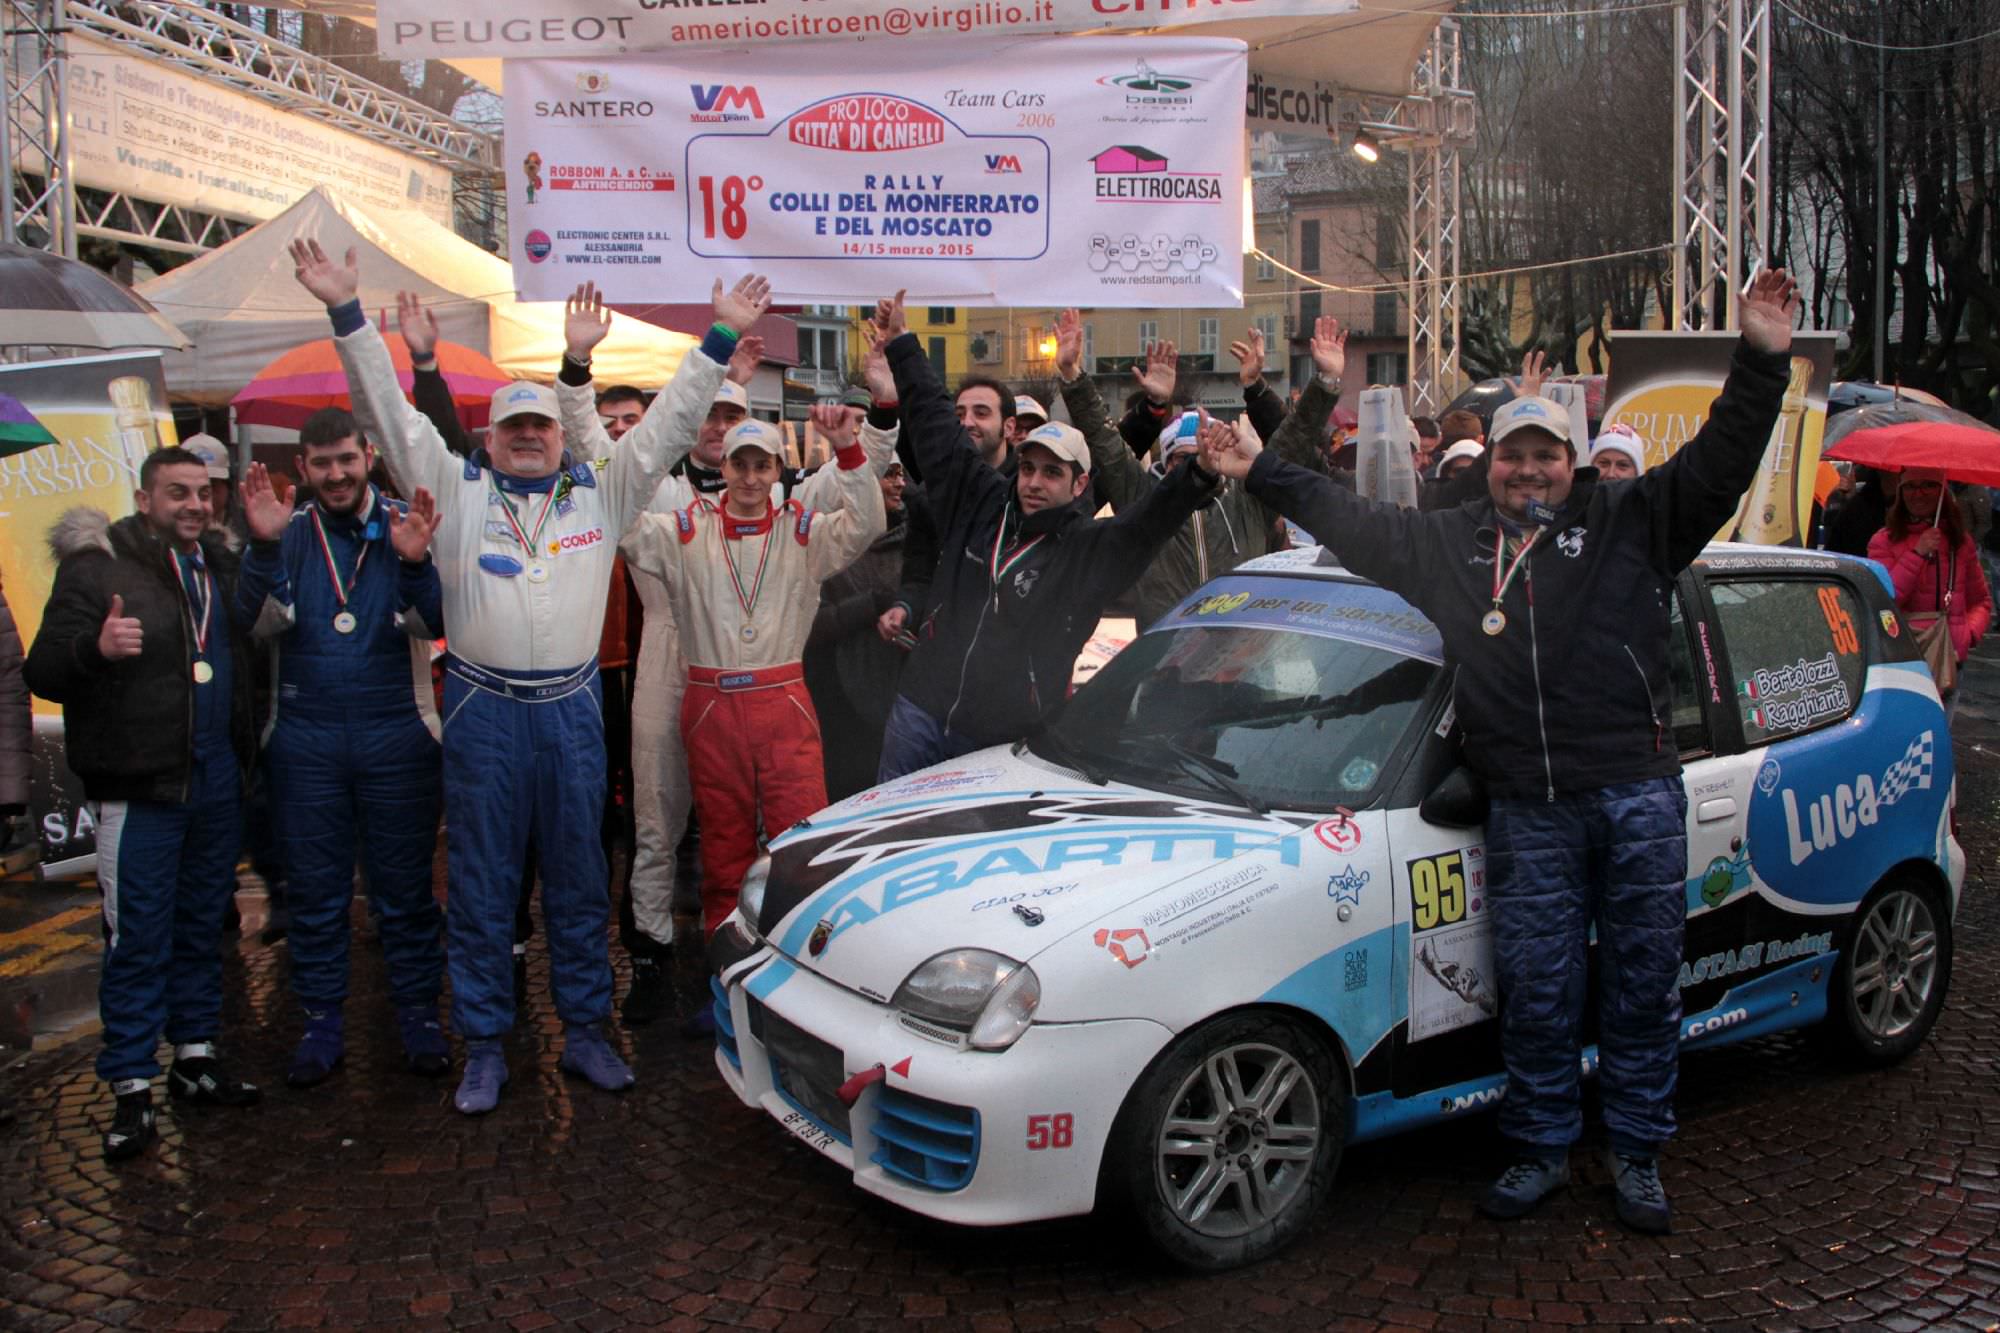 Rally, due equipaggi versiliesi trionfano in Piemonte